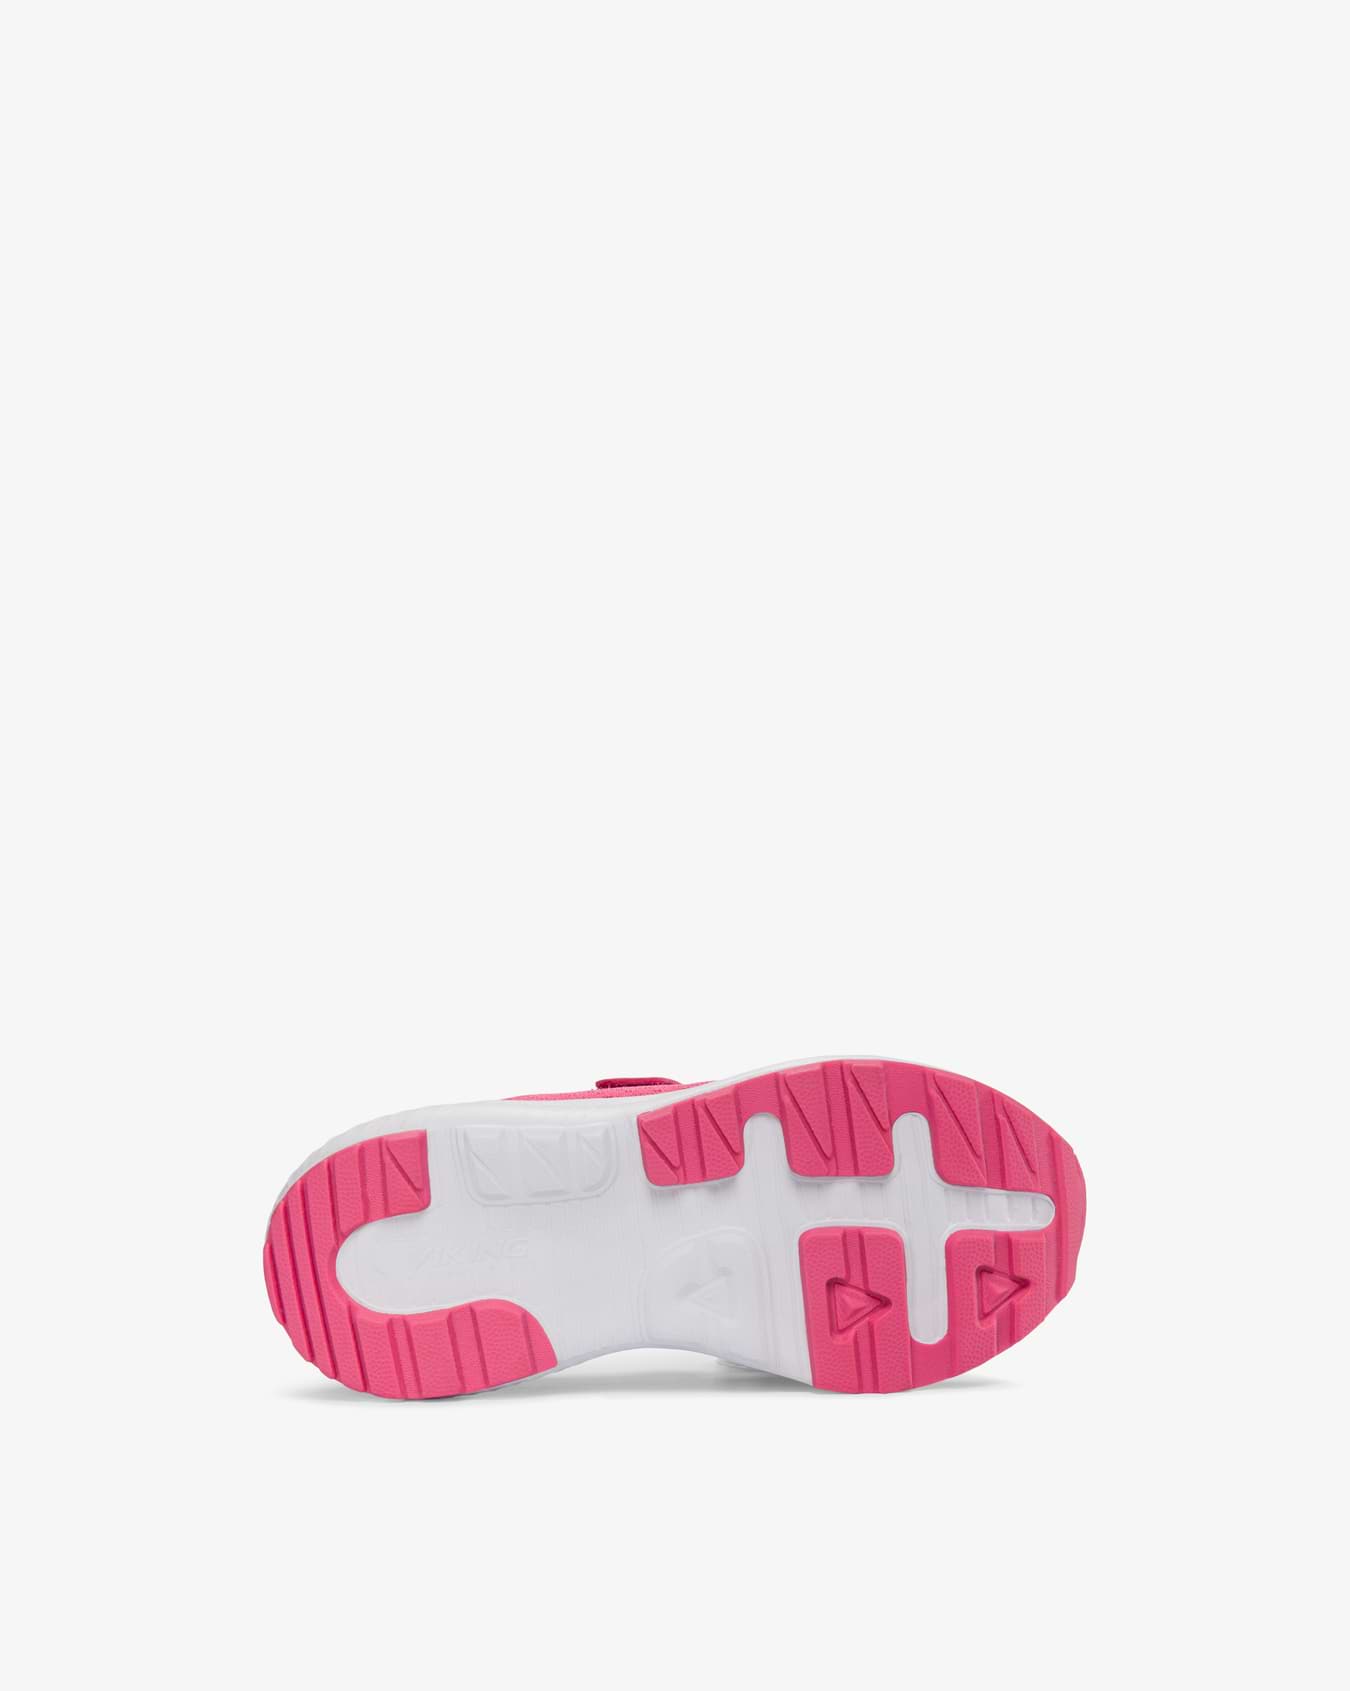 Viking Aery Breeze Kids Sneaker Pink Velcro